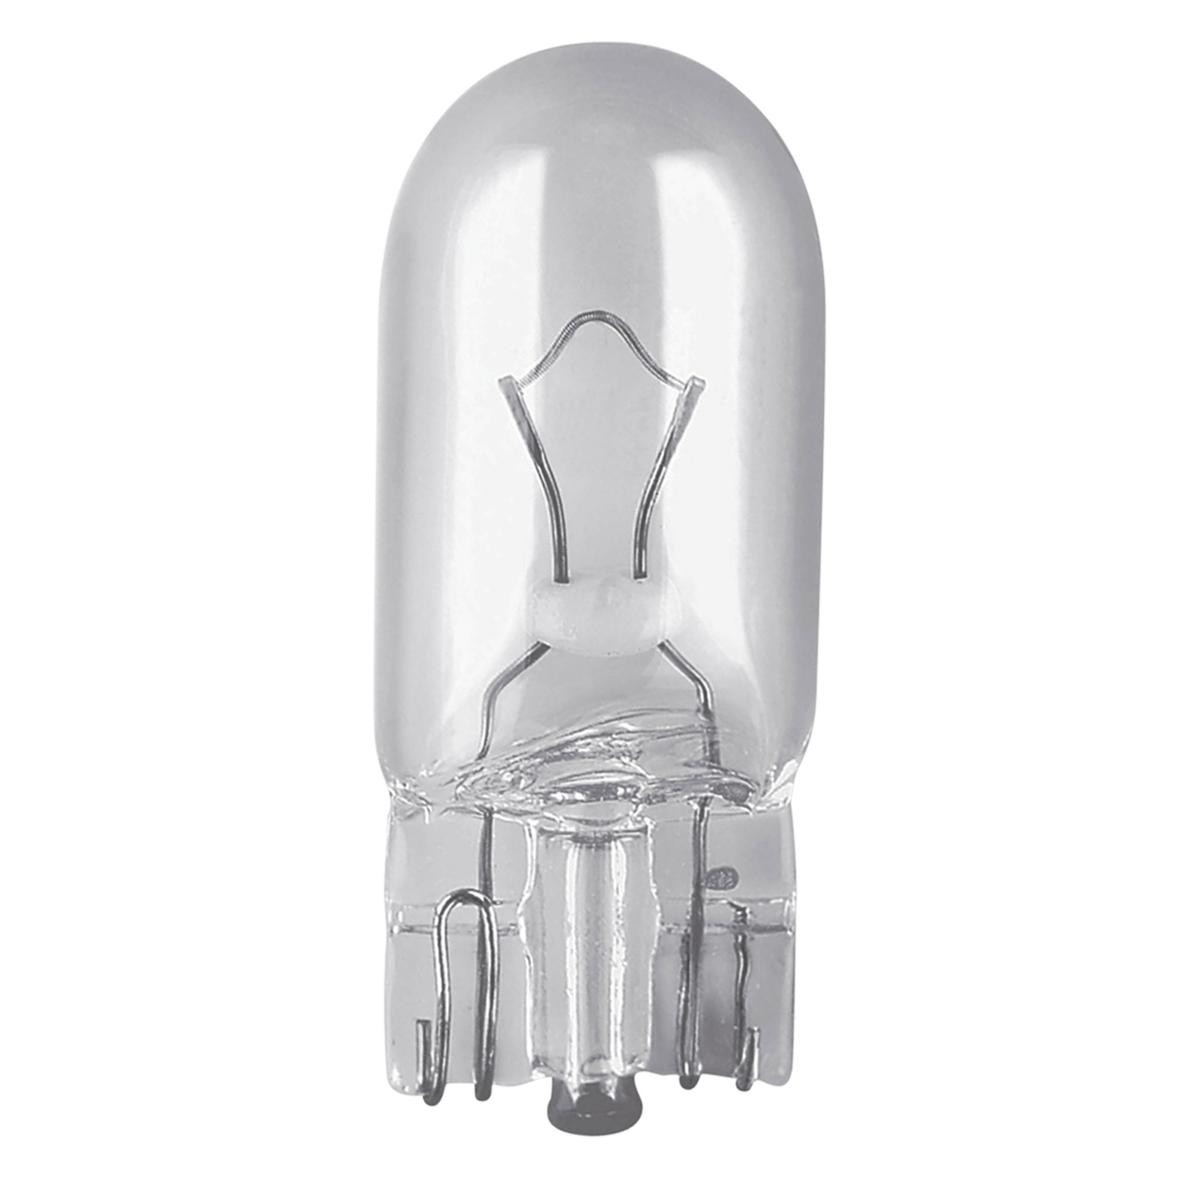 Extra koplampen onderdelen - Gloeilamp, knipperlamp OSRAM 2825ULT